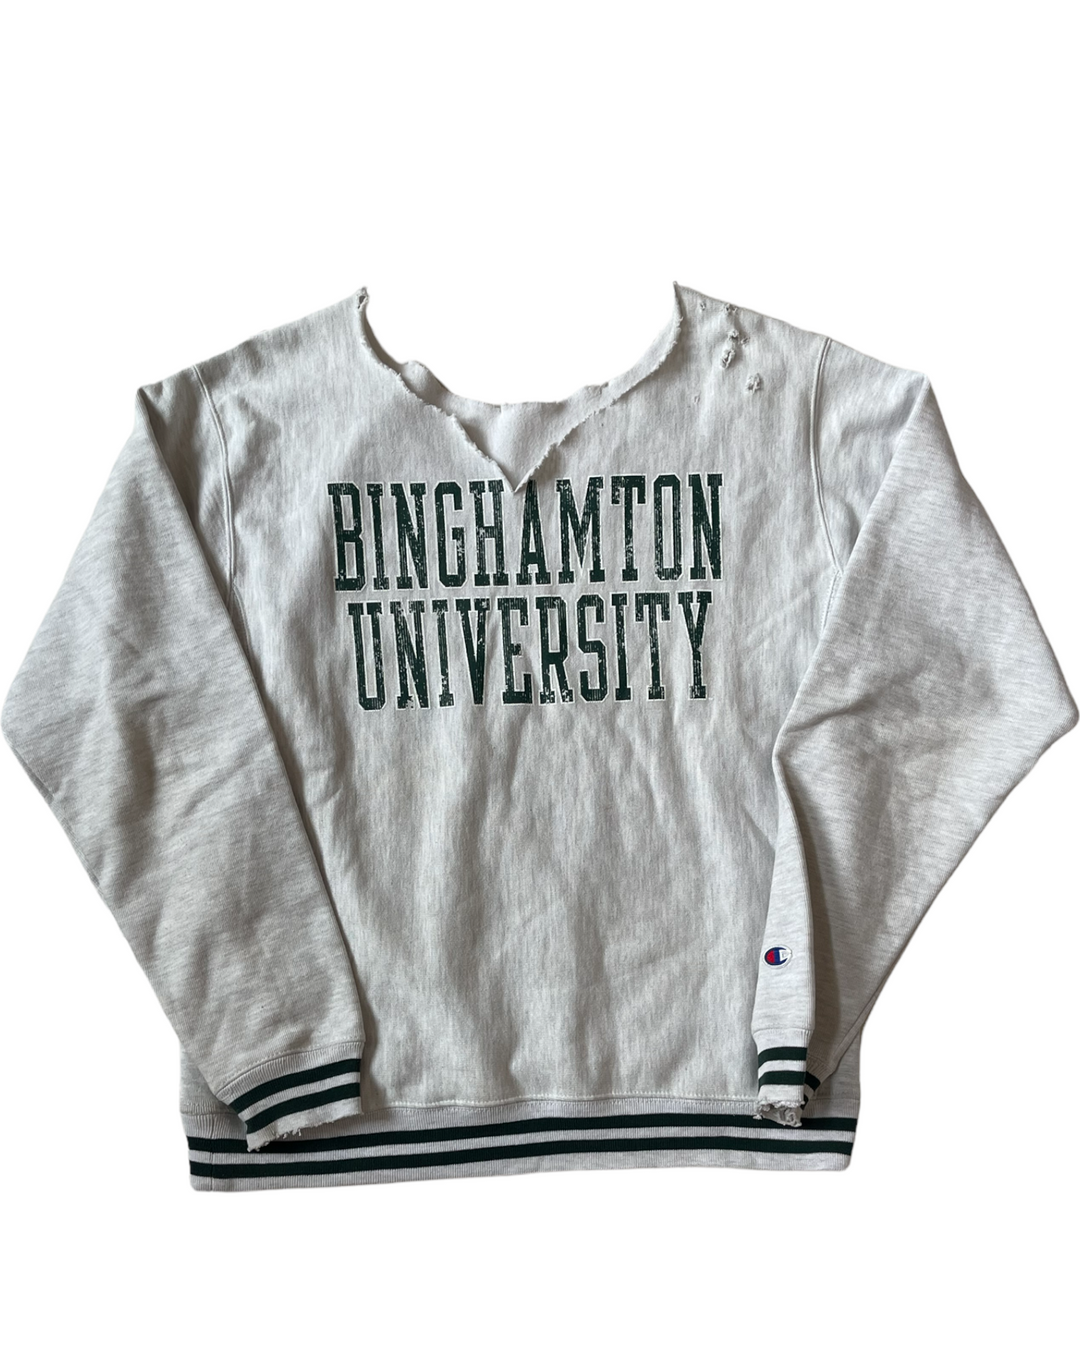 Binghamton Vintage Champion Sweatshirt